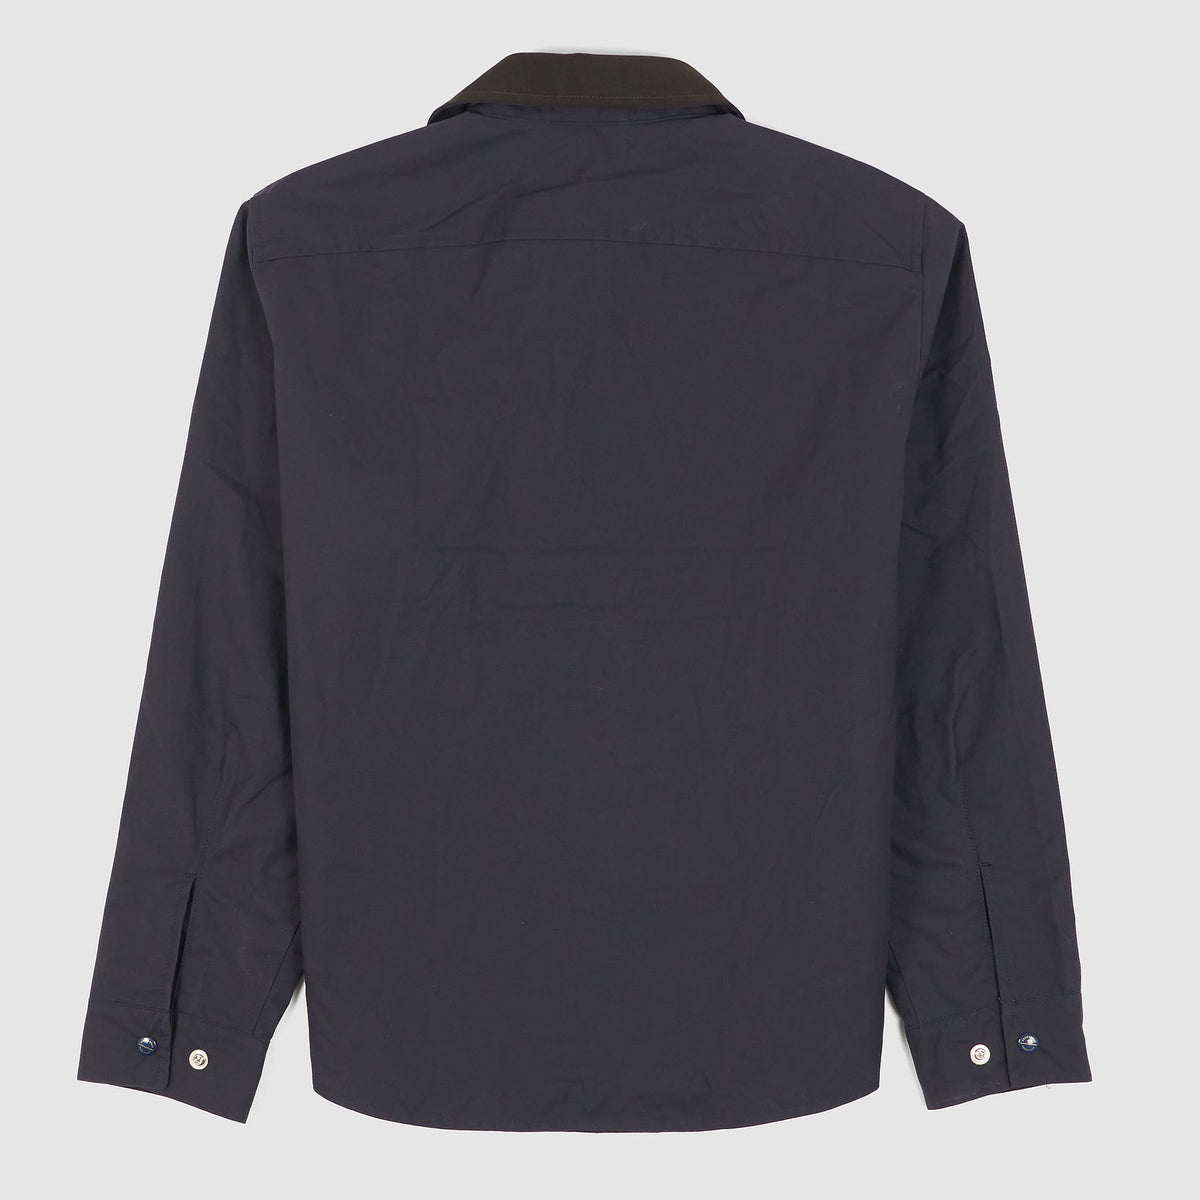 Manifattura Ceccarelli Waxed Over- Shirt Jacket